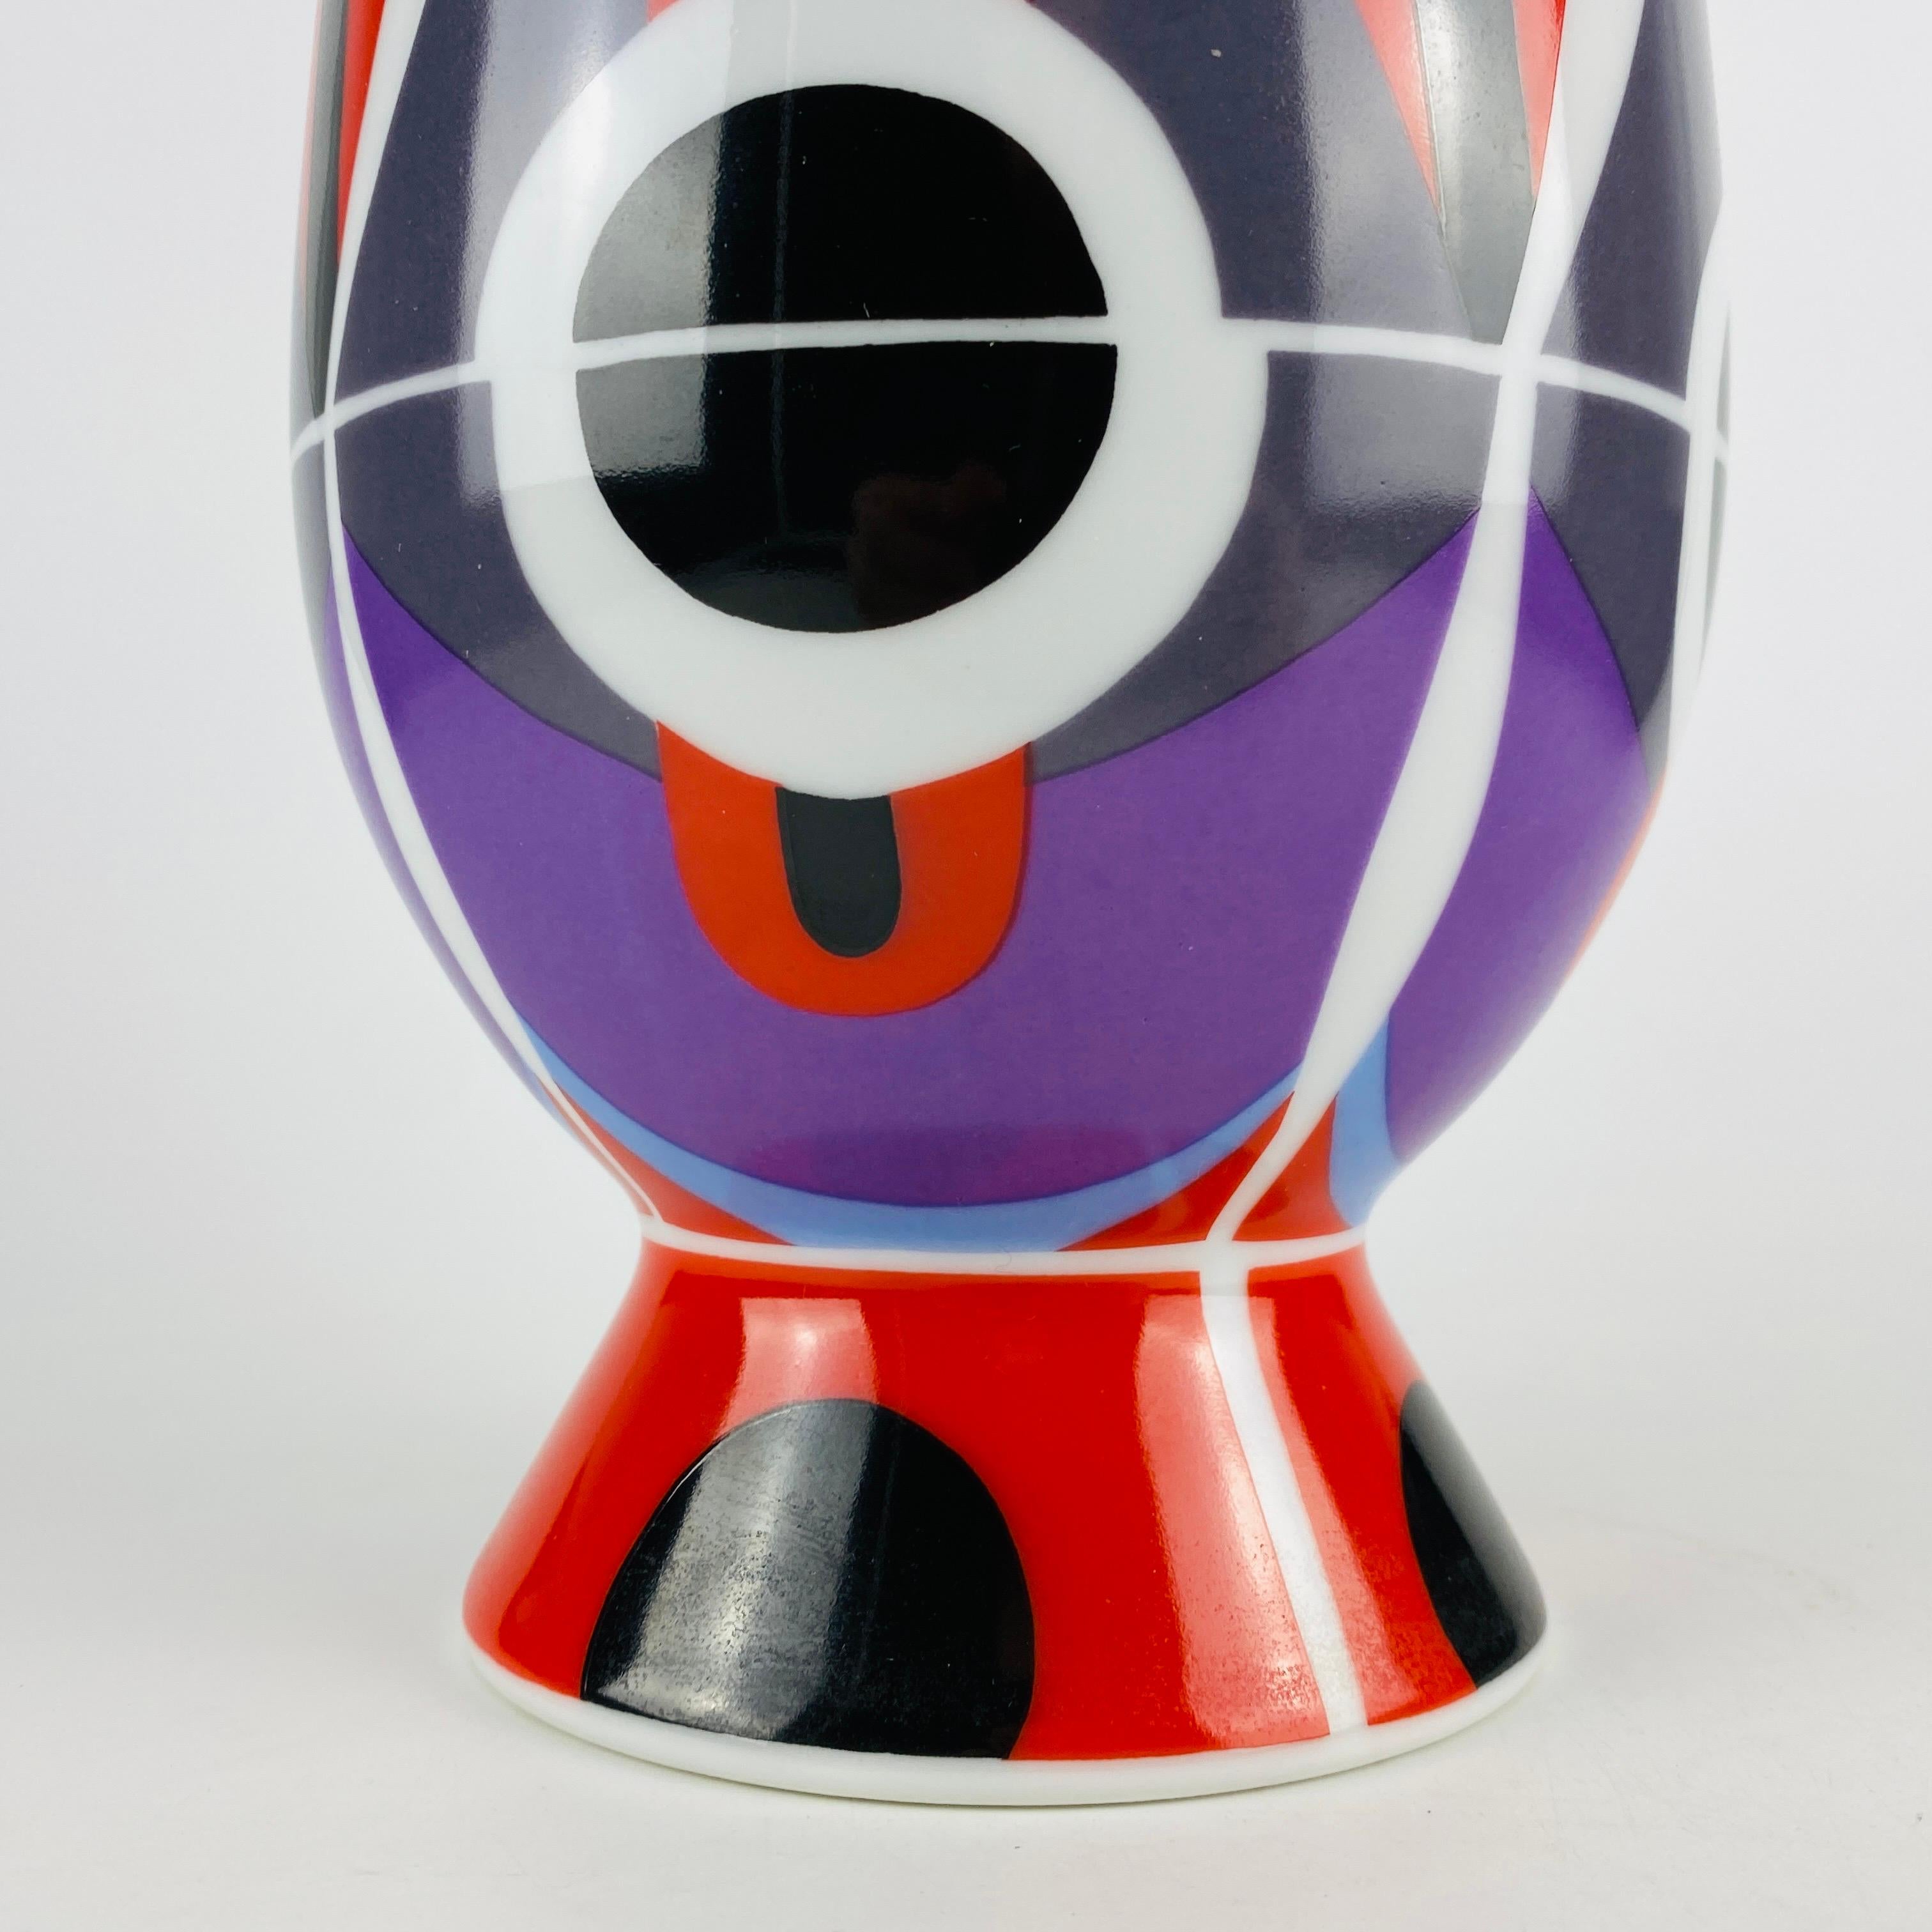 20th Century Alessi Tendentse Vase by Robert Venturi for A. Mendini 100% Make-Up Serie N90